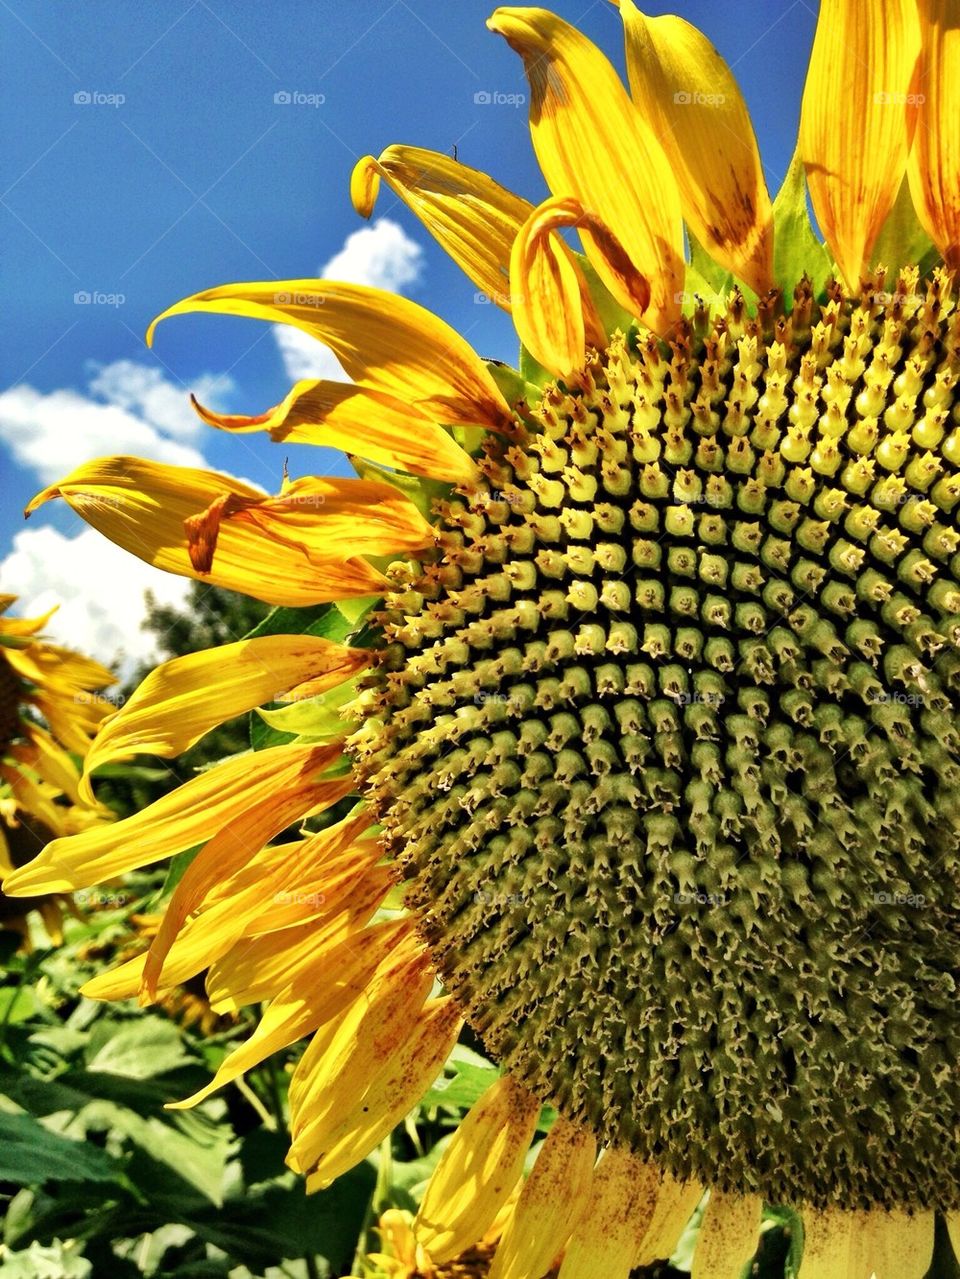 Sunflower- close up